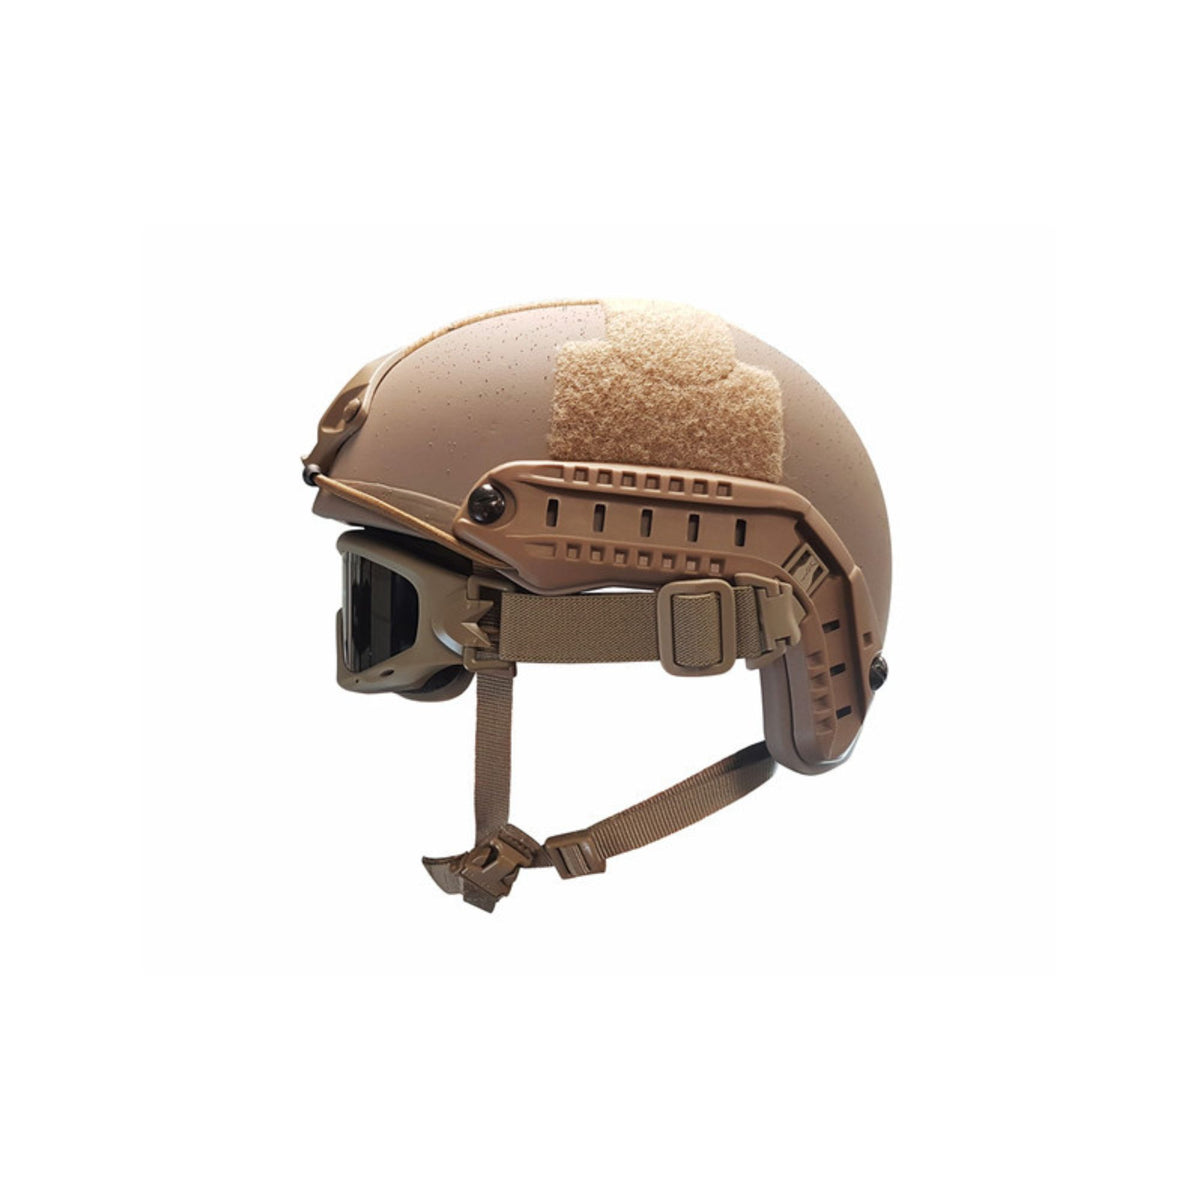 WILEYX | SPEAR RAS ARC RAIL Tan - Adattatore per casco  ARC compatibile